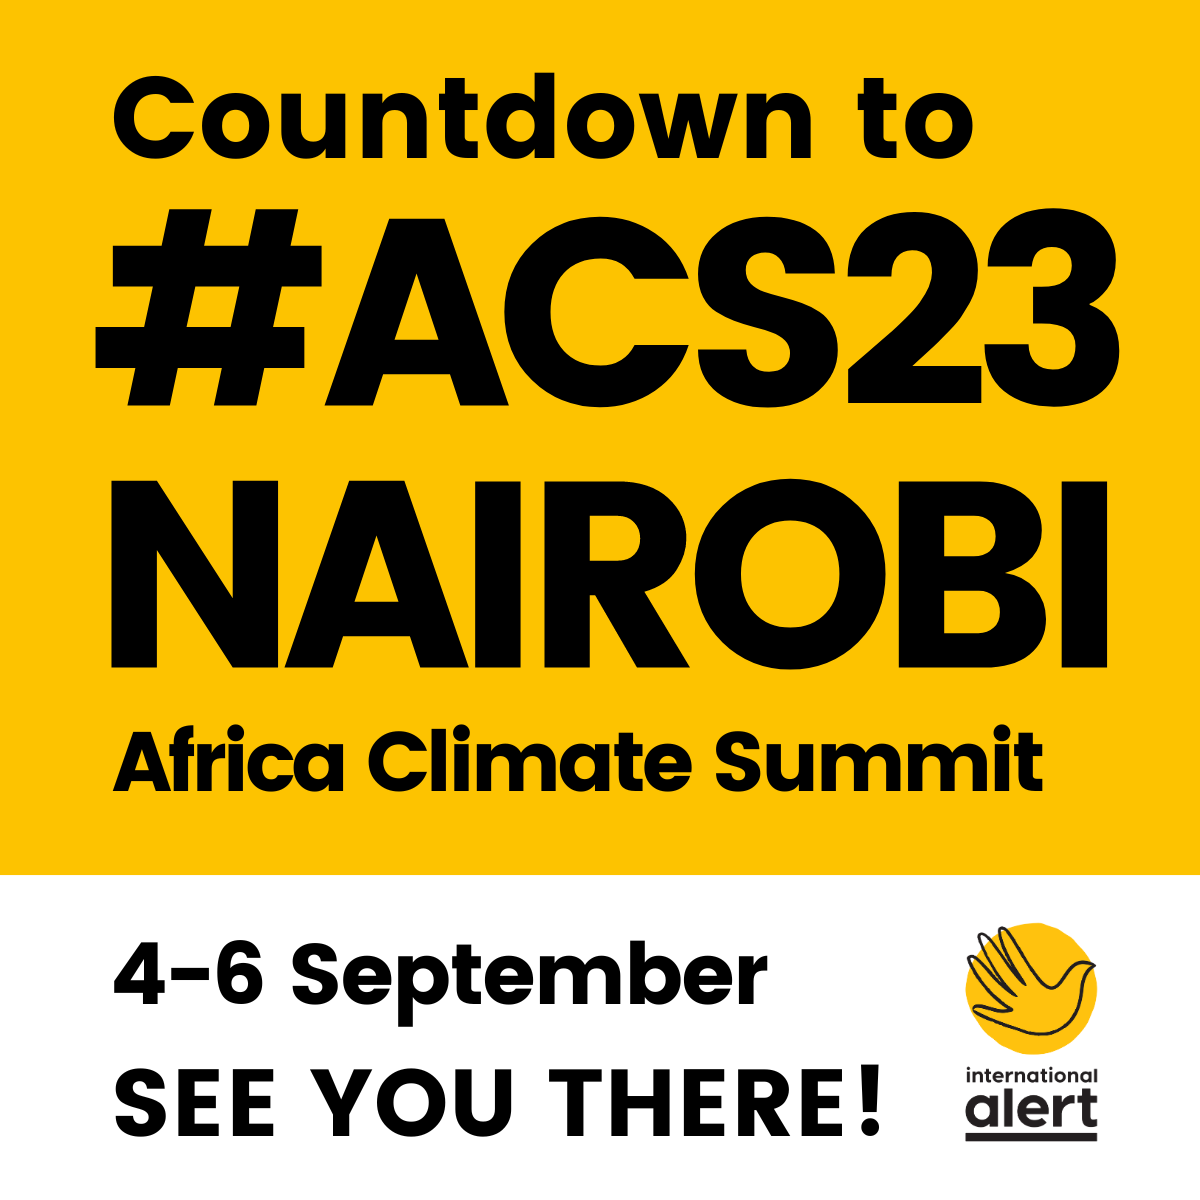 Will you be at the #AfricaClimateSummit? We will be there to add our voice to driving green growth & climate finance solutions for Africa & the World.@Sida @Irish_Aid @AusHCKenya @NicHaileyAlert @IrlEmbKenya @UKinKenya @IOMKenya @gatesfoundation @giz_gmbh @DanishMFA @USAIDKenya